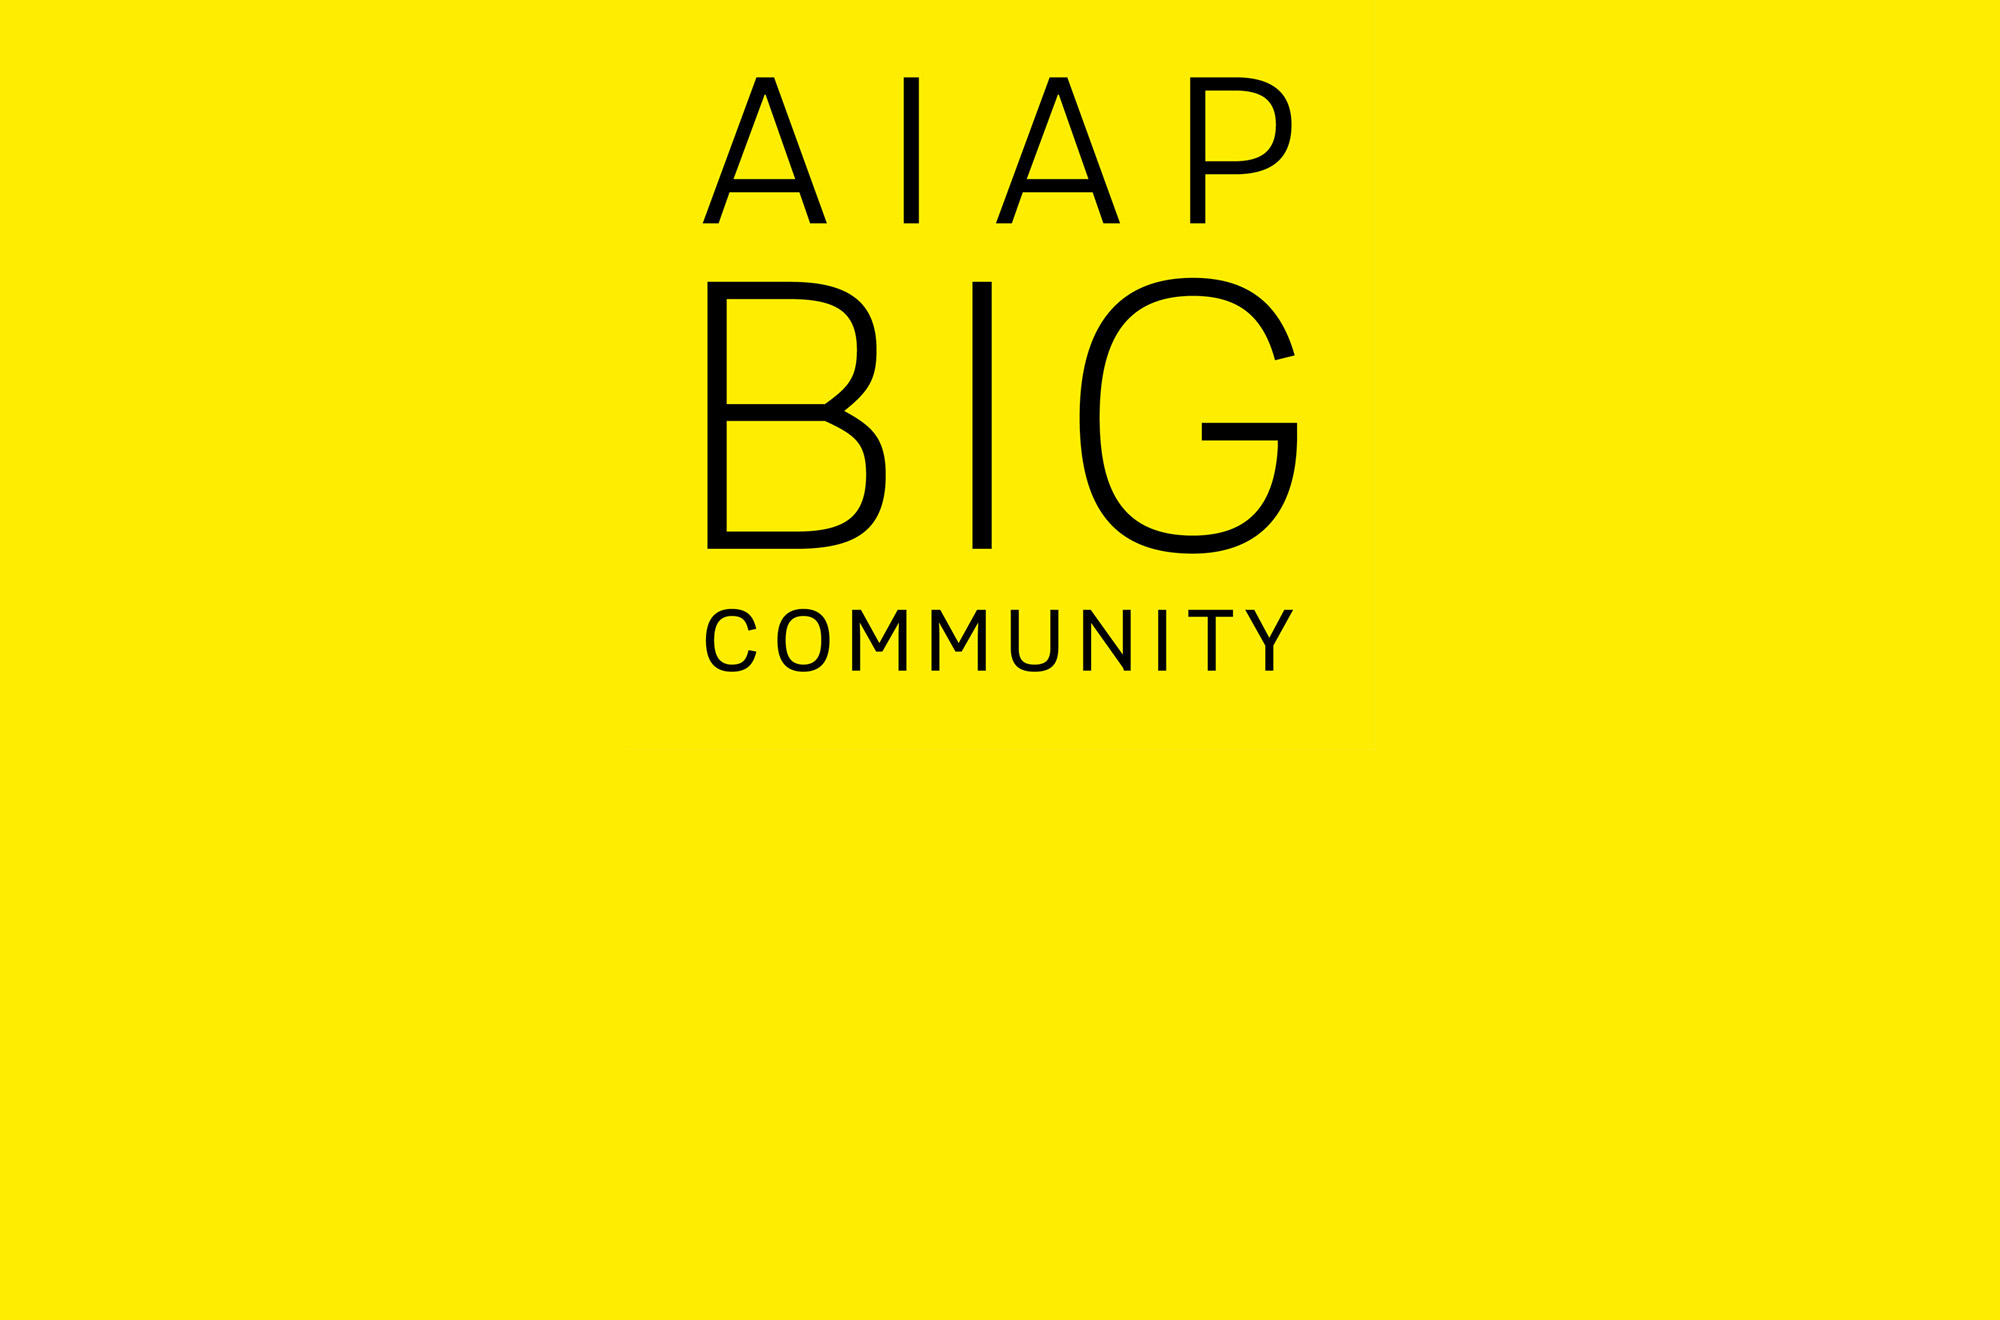 Aiap Big Community